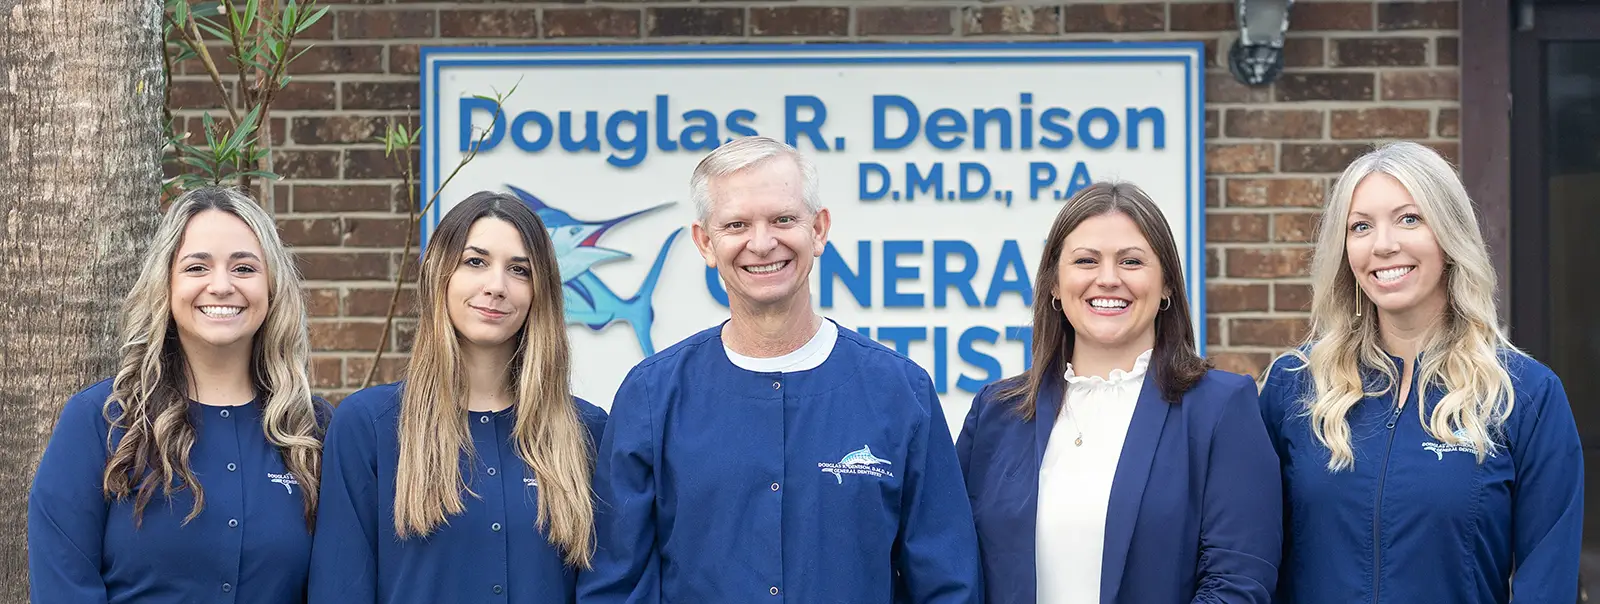 Daytona Dentist Dr. Douglas Denison and his Office Staff